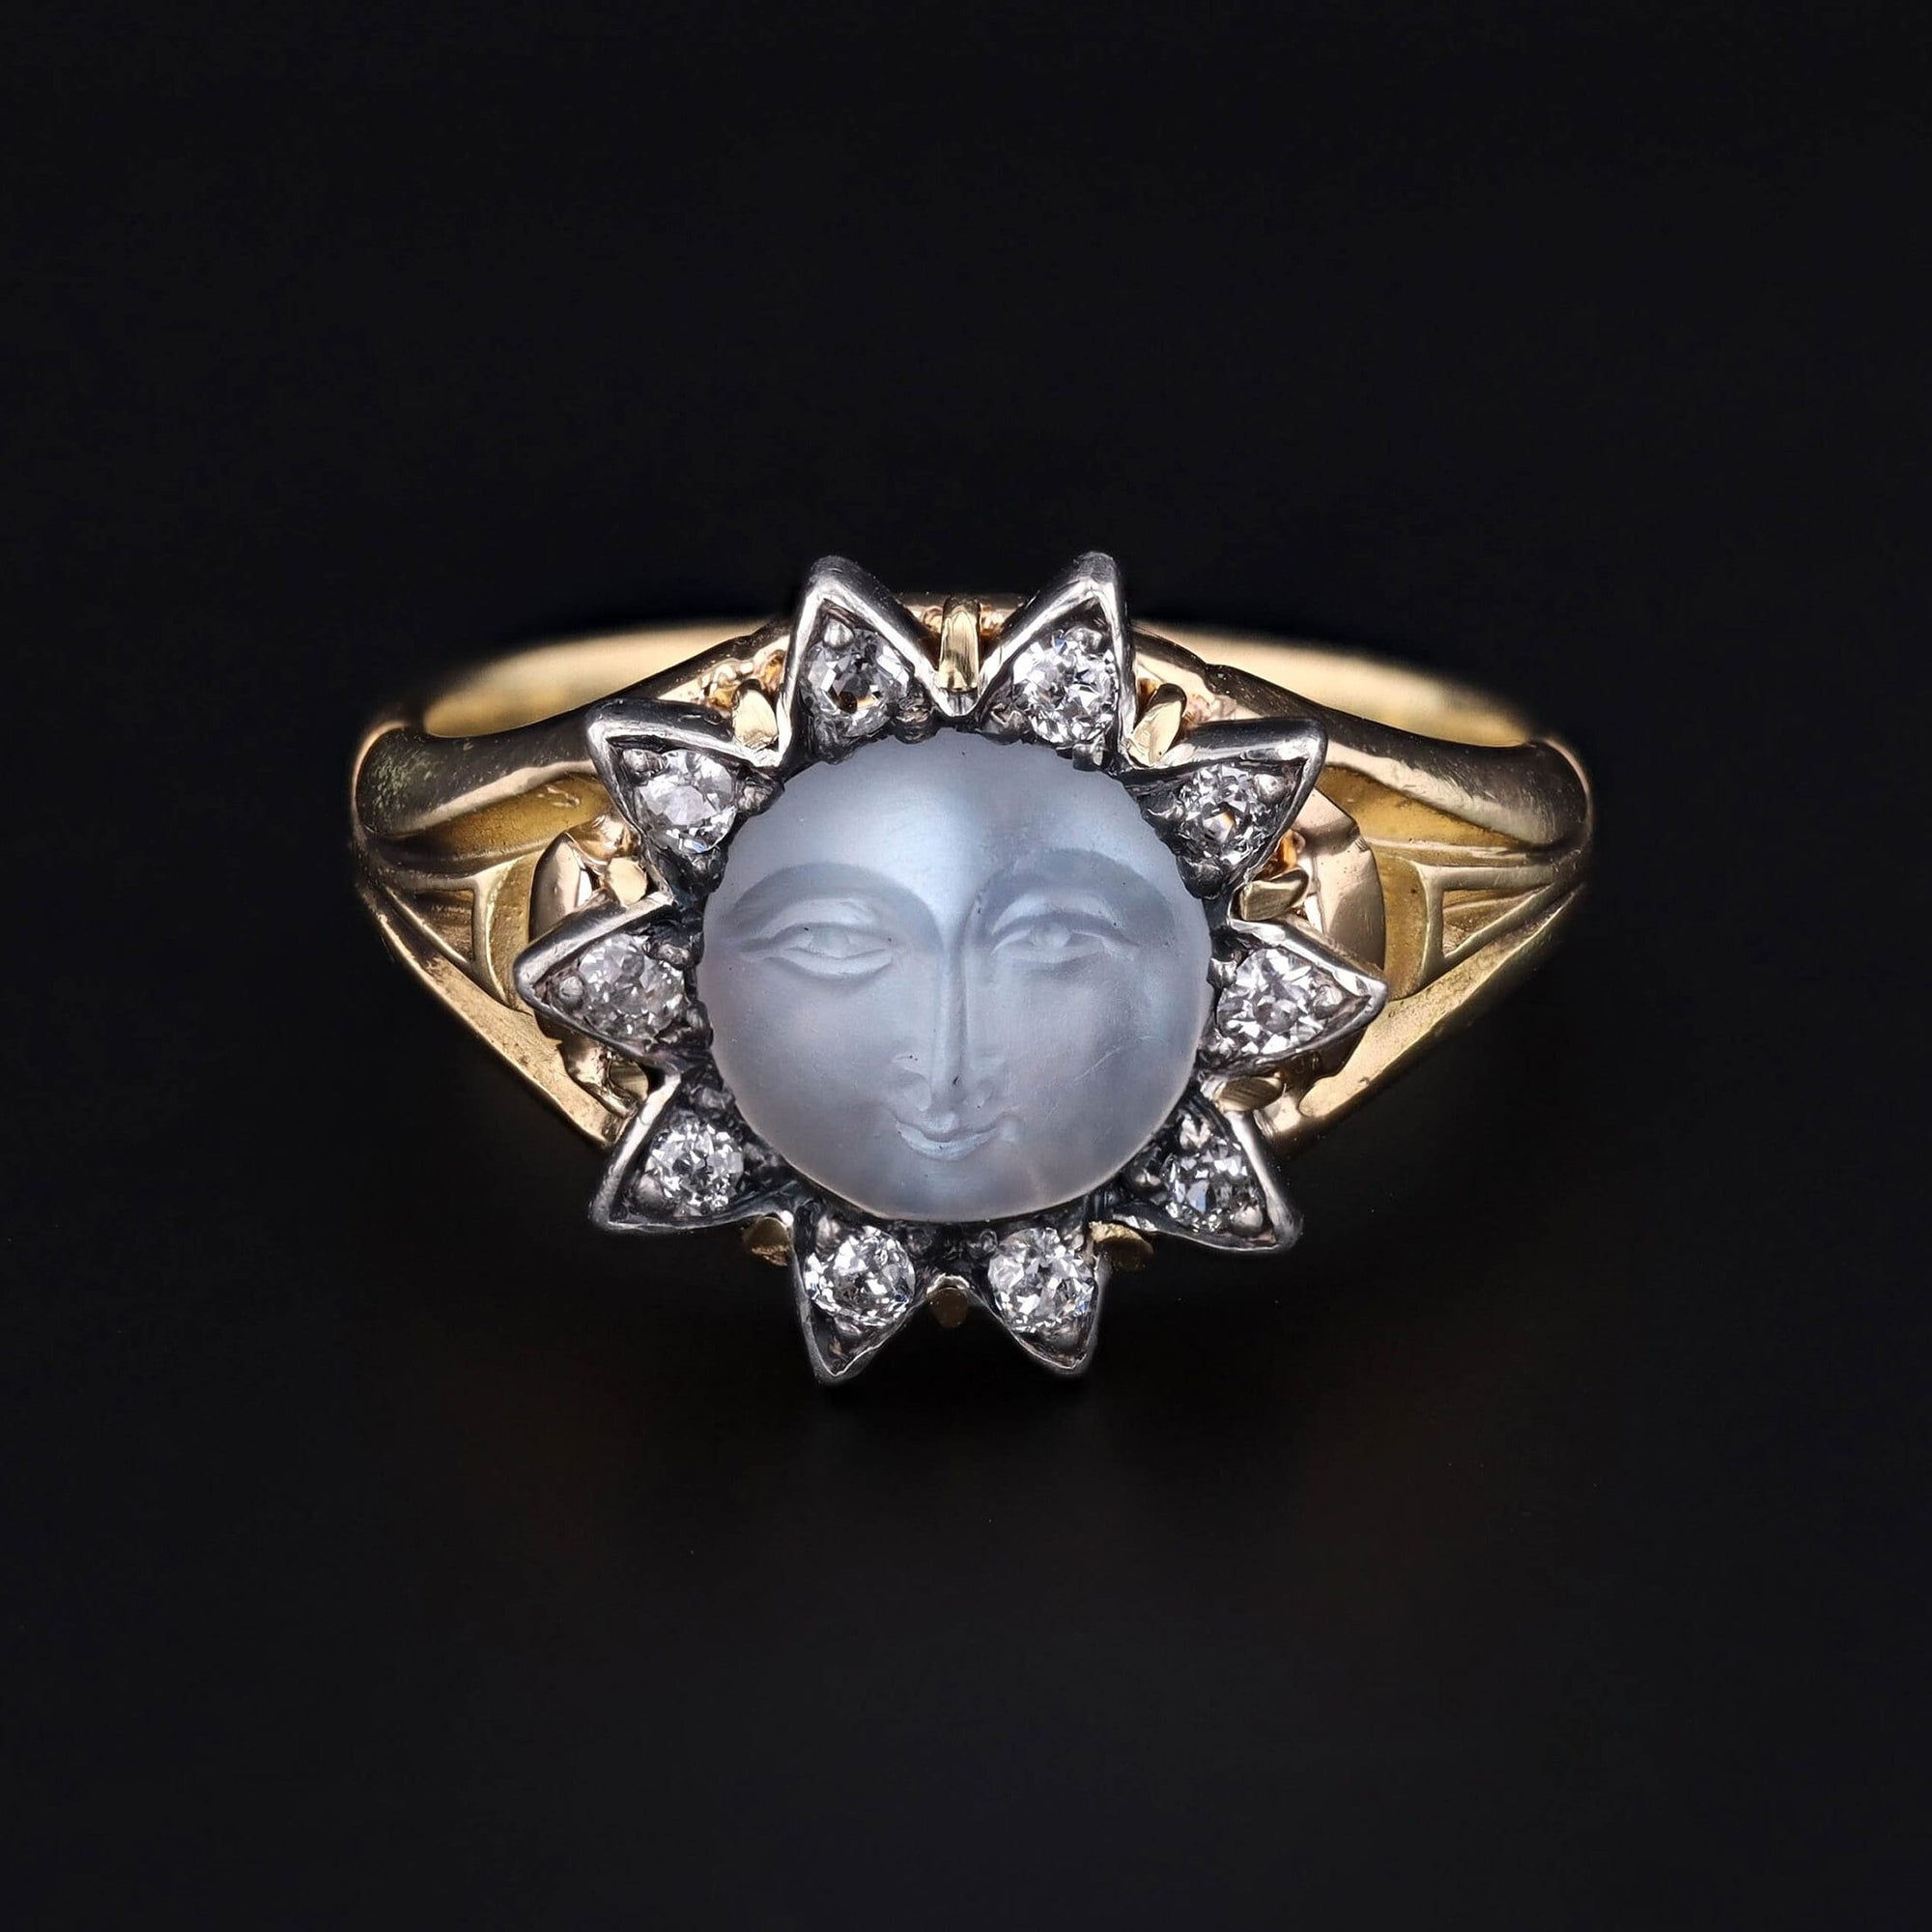 Man in the Moon Ring | 18k Gold, Moonstone & Diamond Ring 